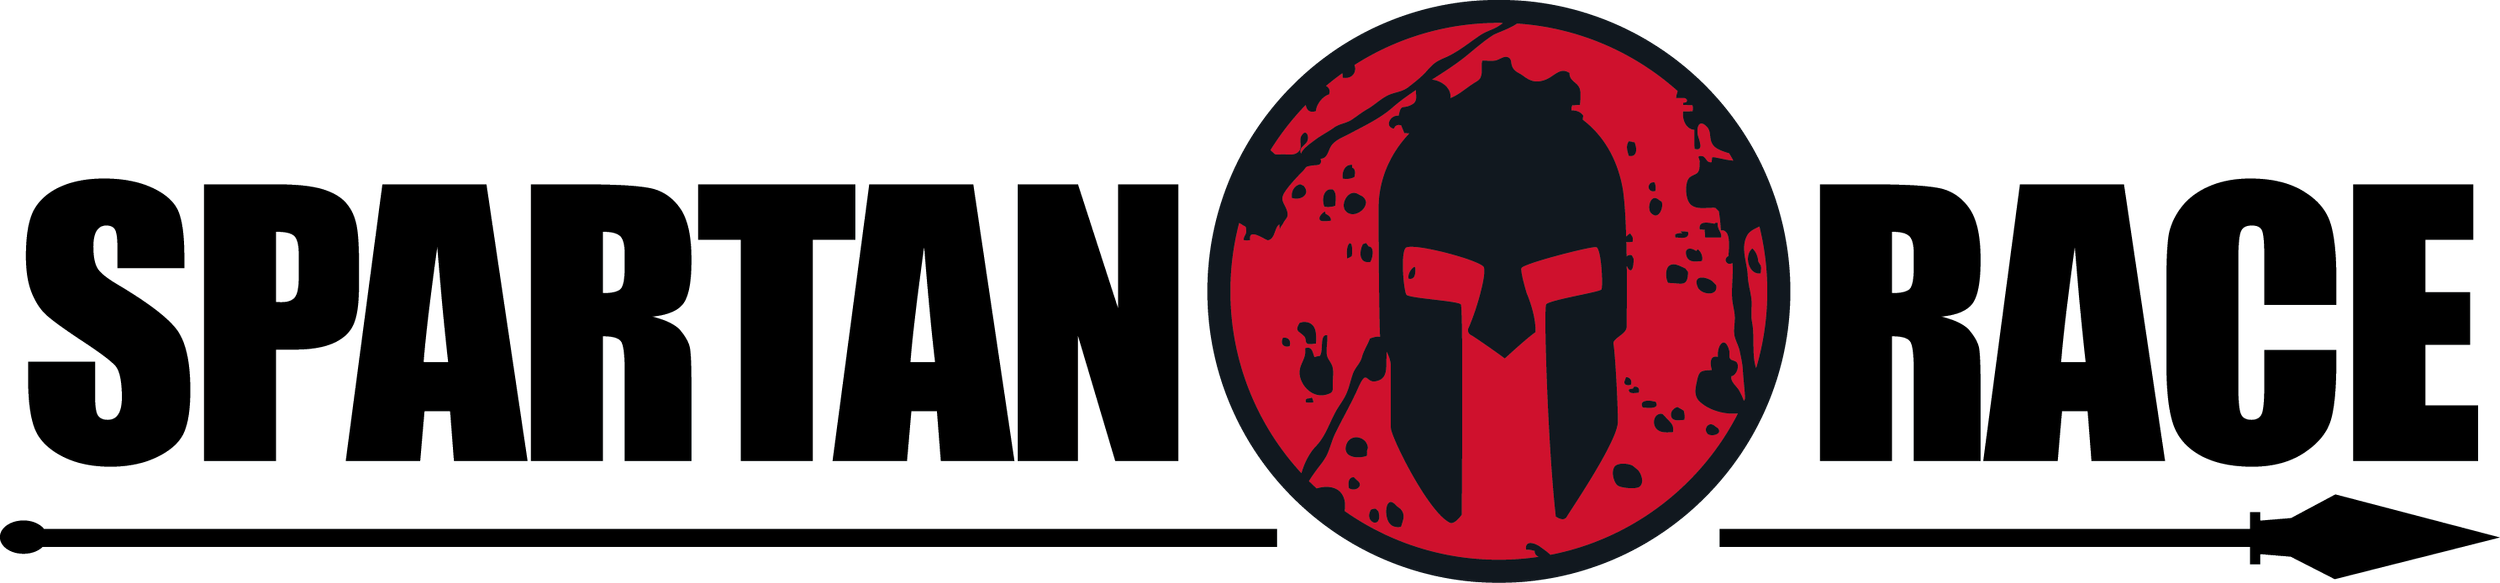 Spartan Race Logo.png